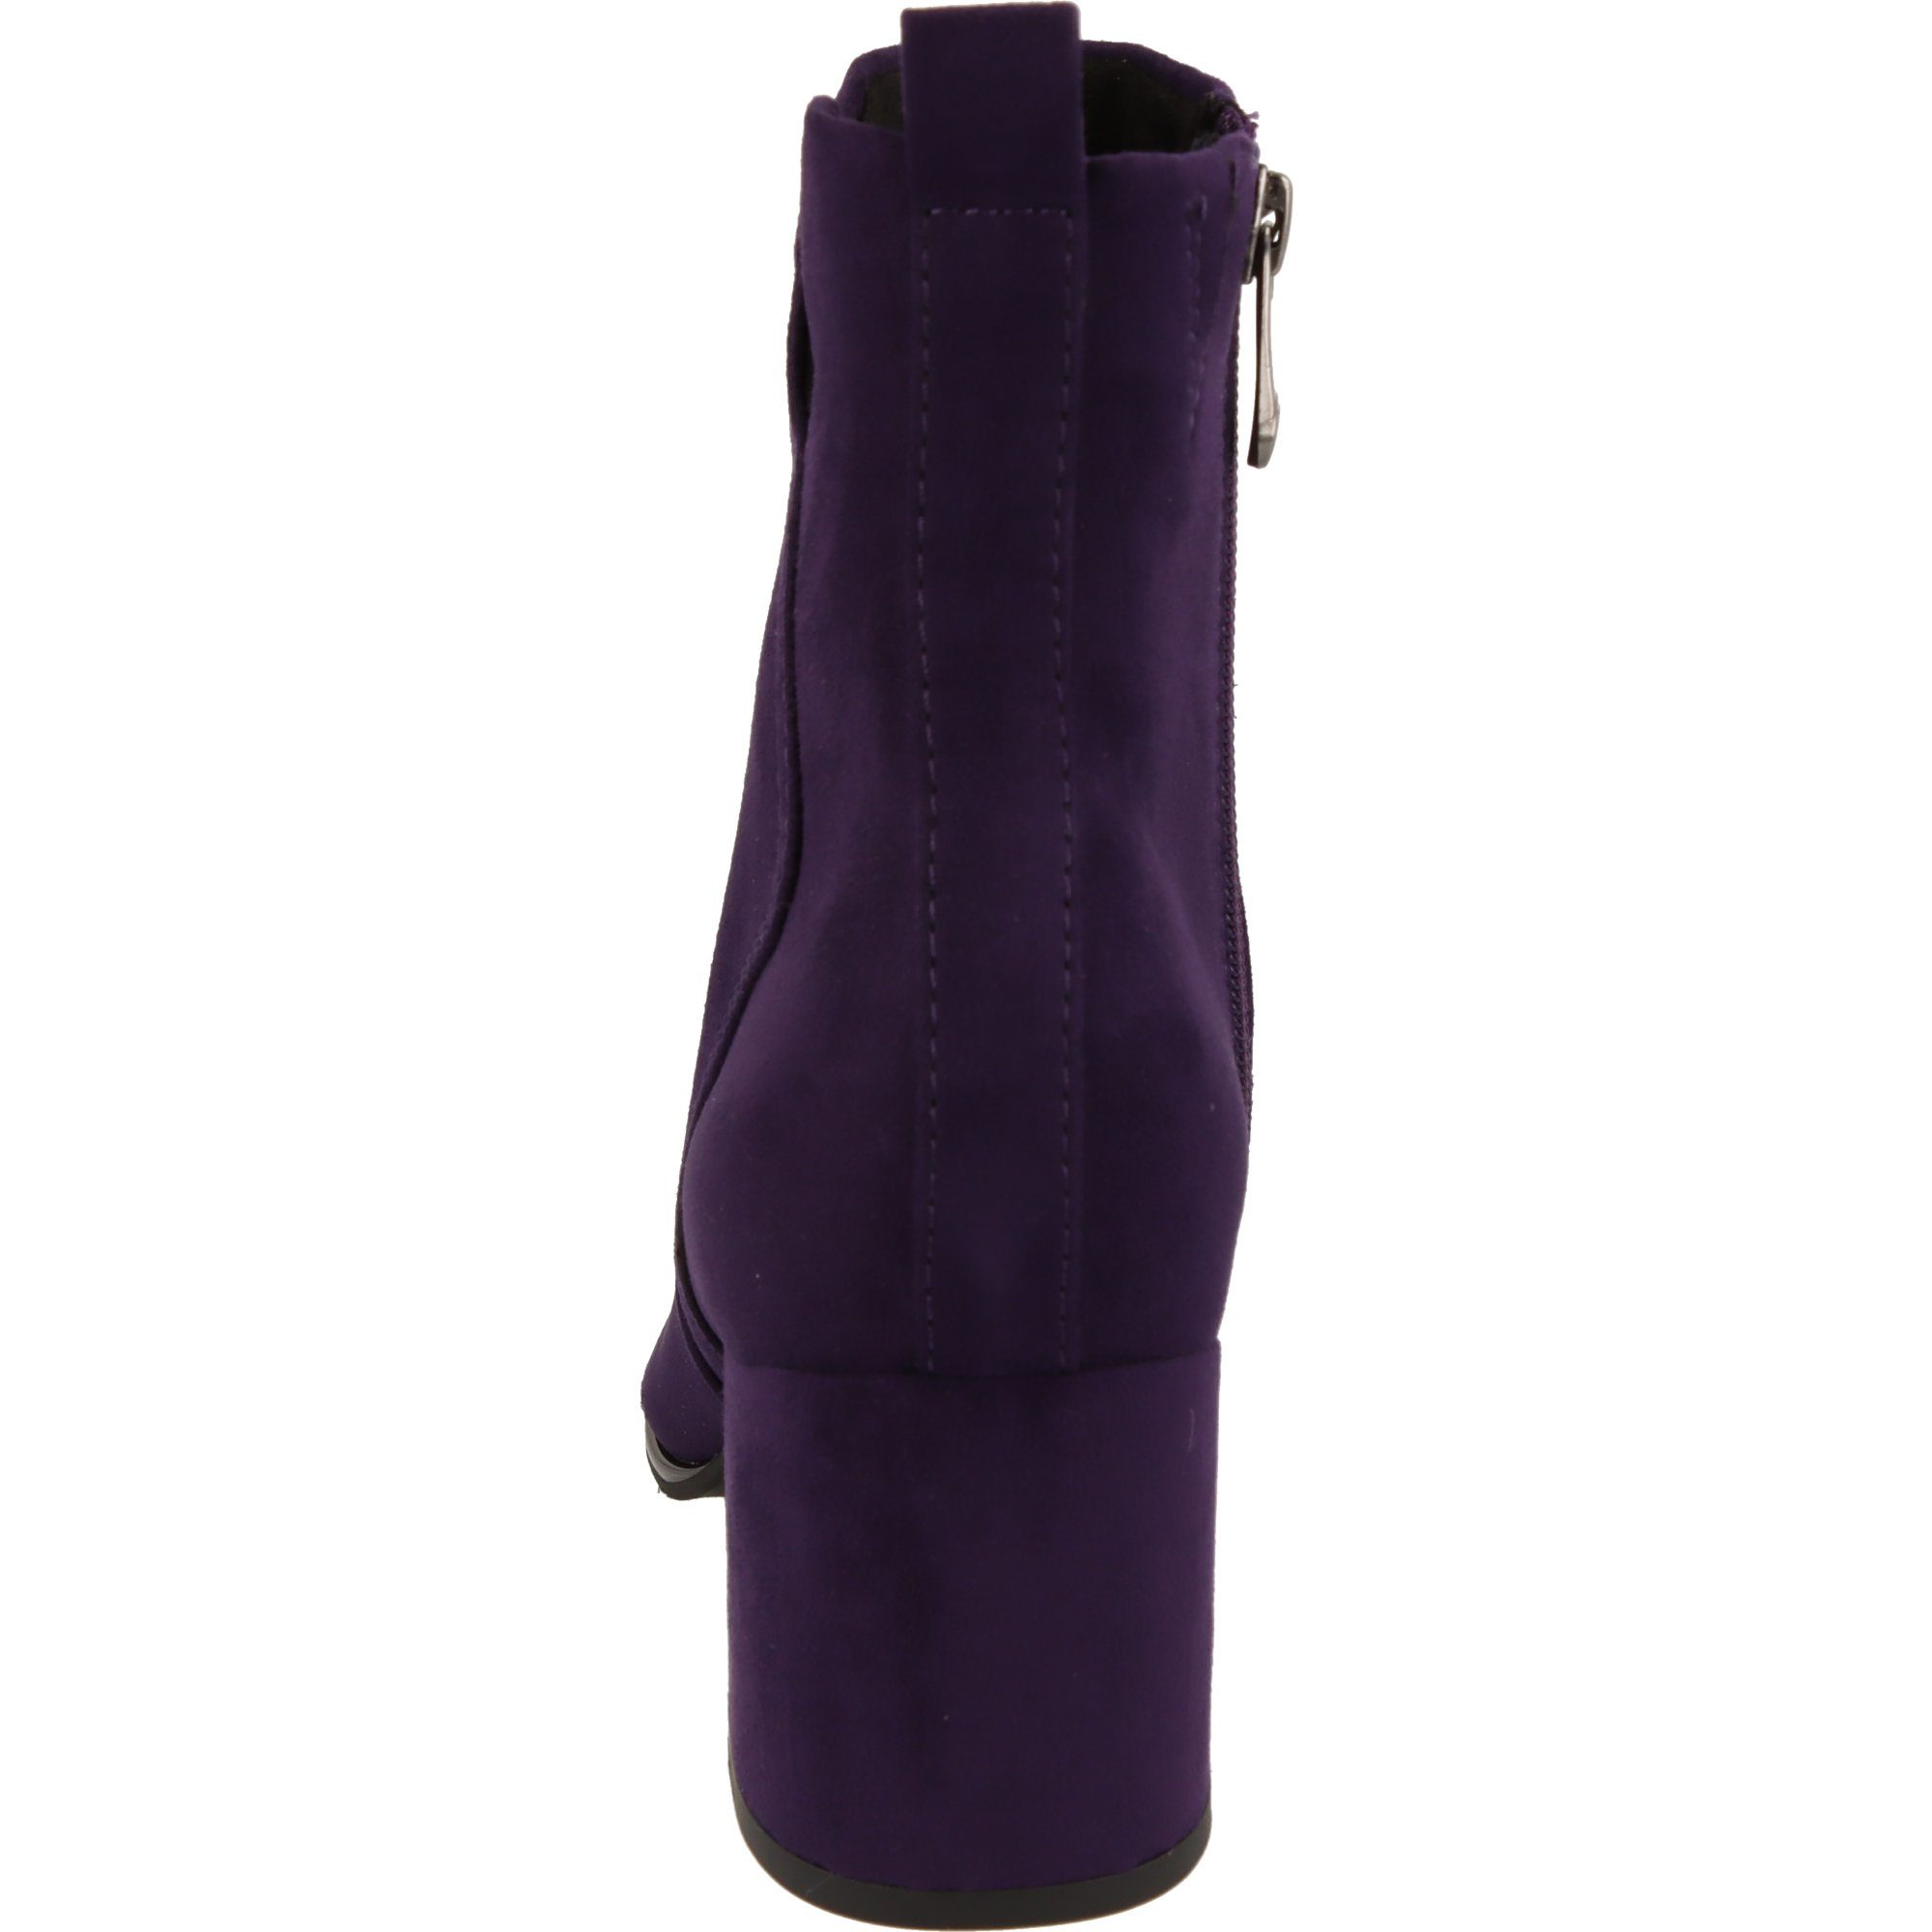 Schuhe 2-25095-41 elegante TOZZI MARCO Reißverschluss Damen Purple High-Heel-Stiefelette